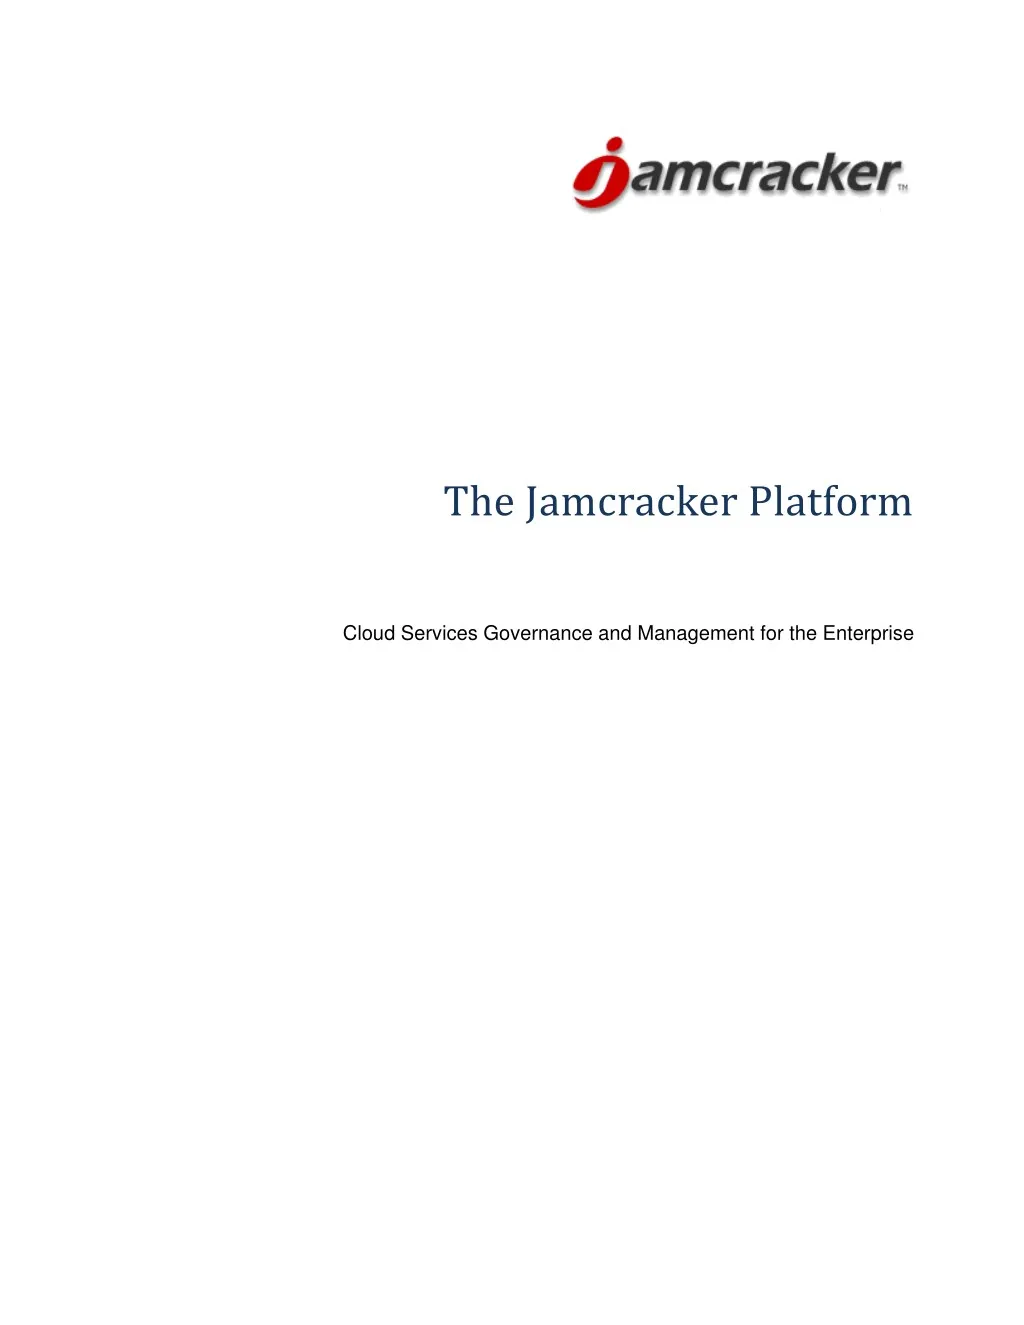 the jamcracker platform